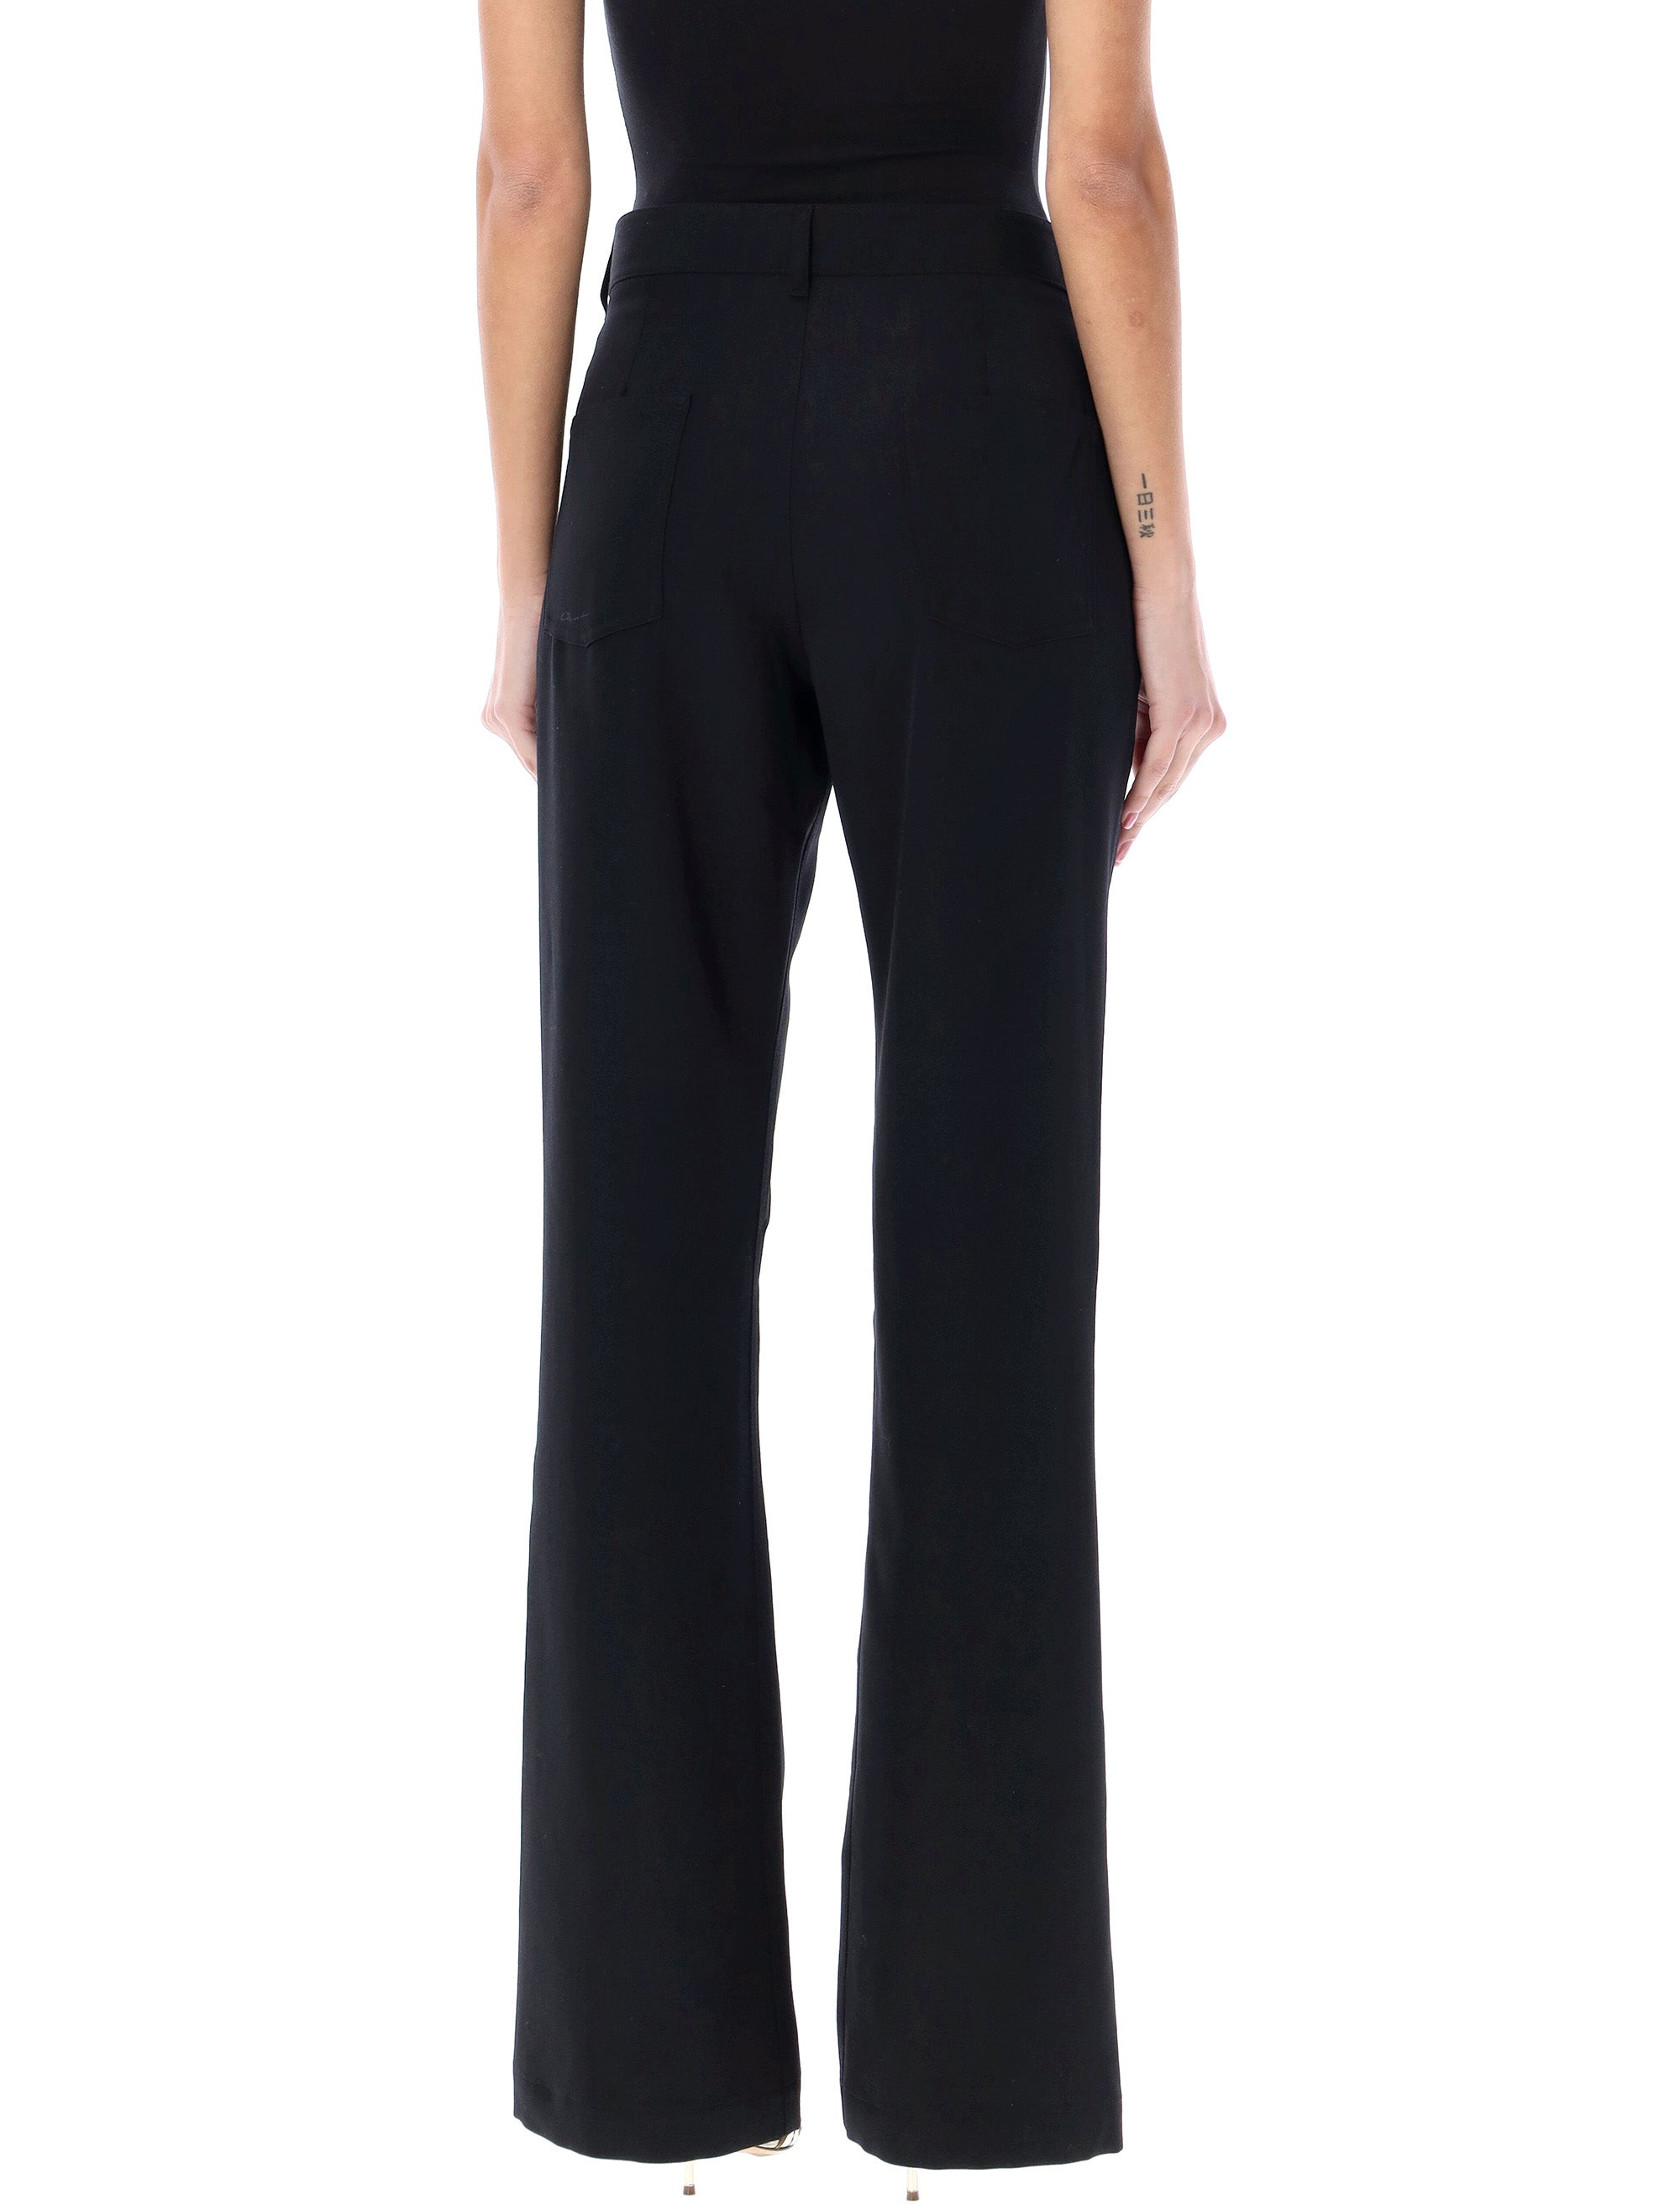 Shop Balmain Luxurious Black Bootcut Pants For The Modern Woman